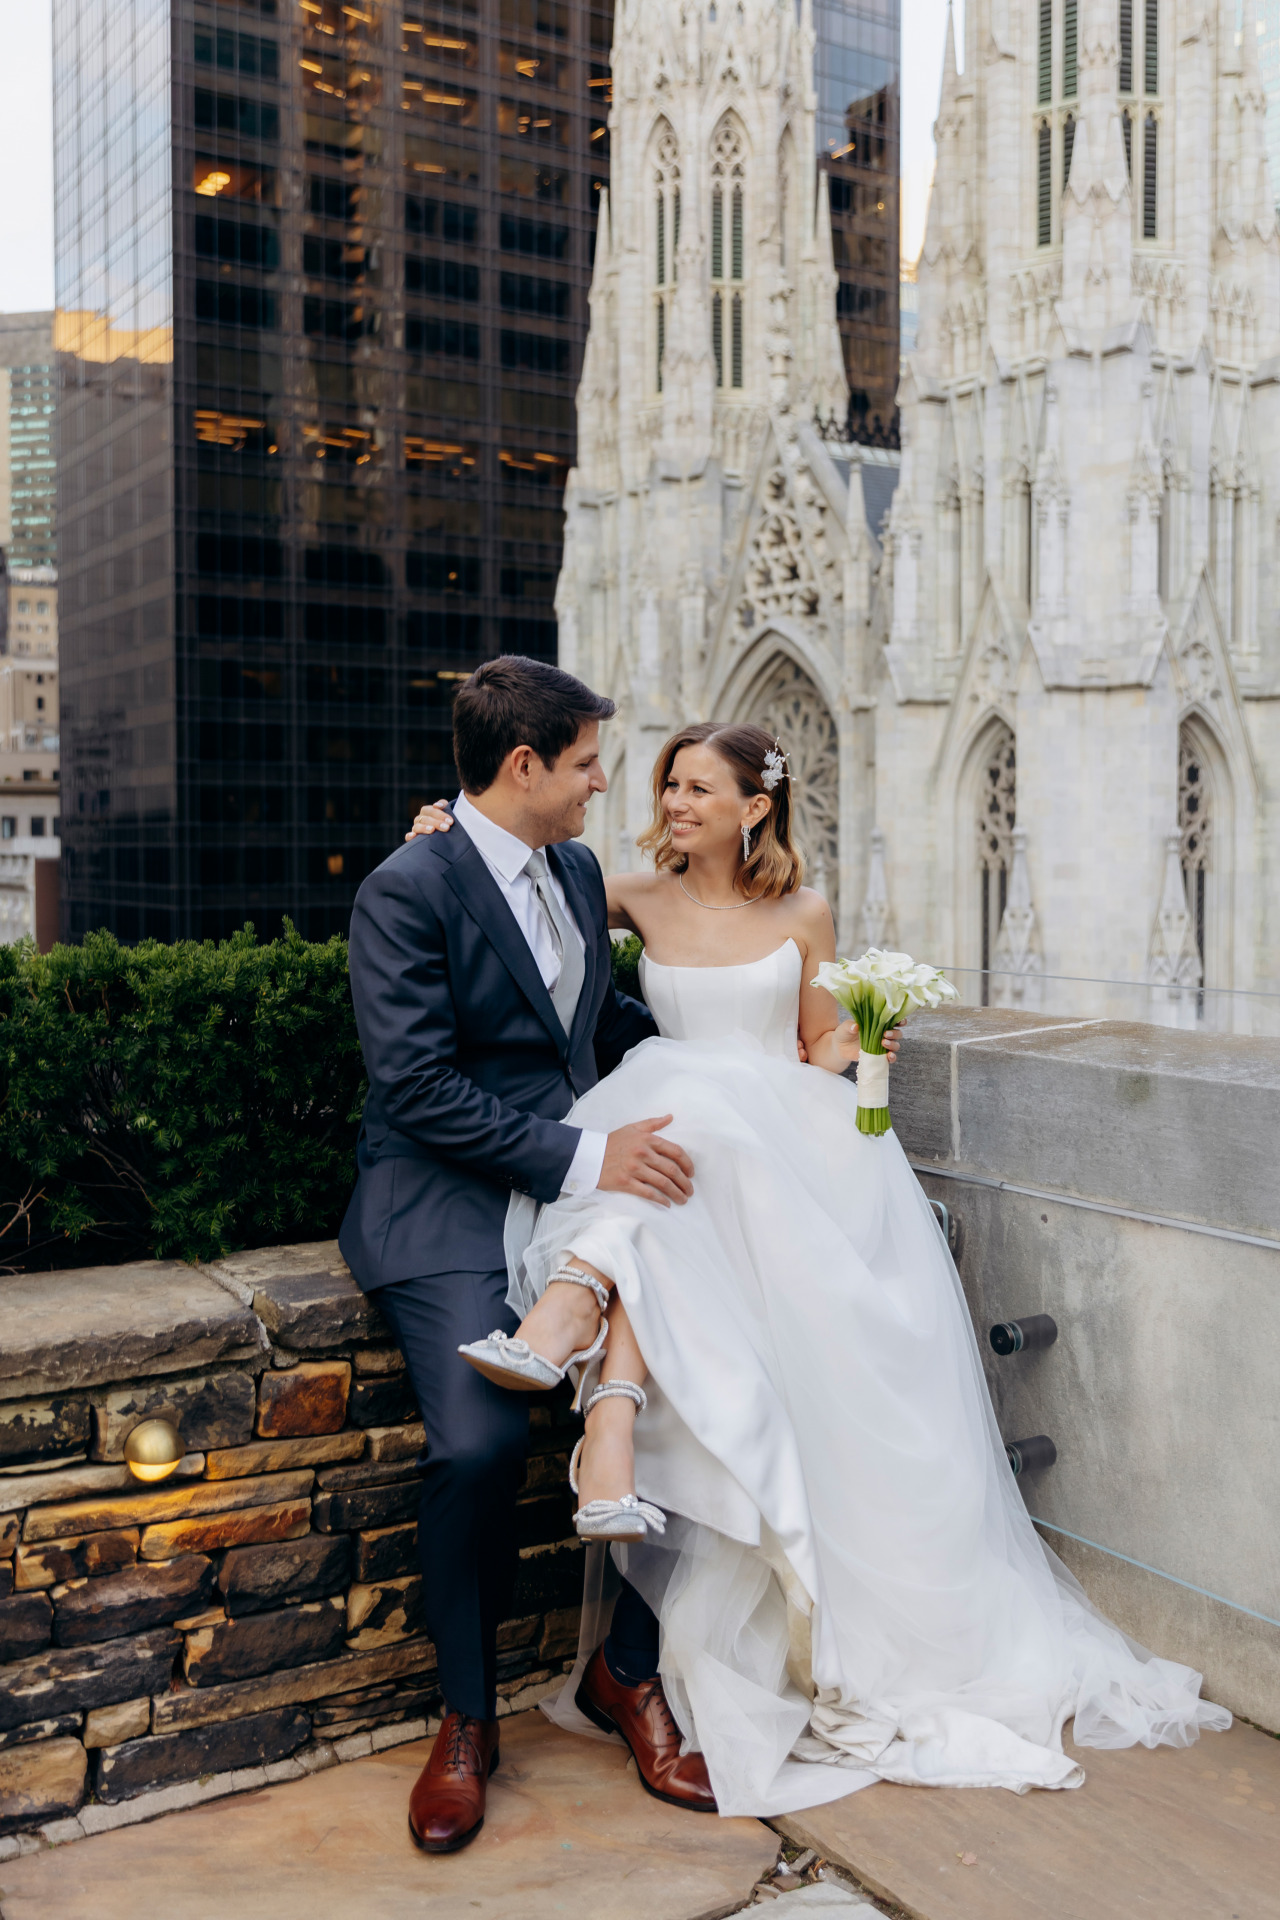 6 Rooftop wedding photoshoot New York City 2